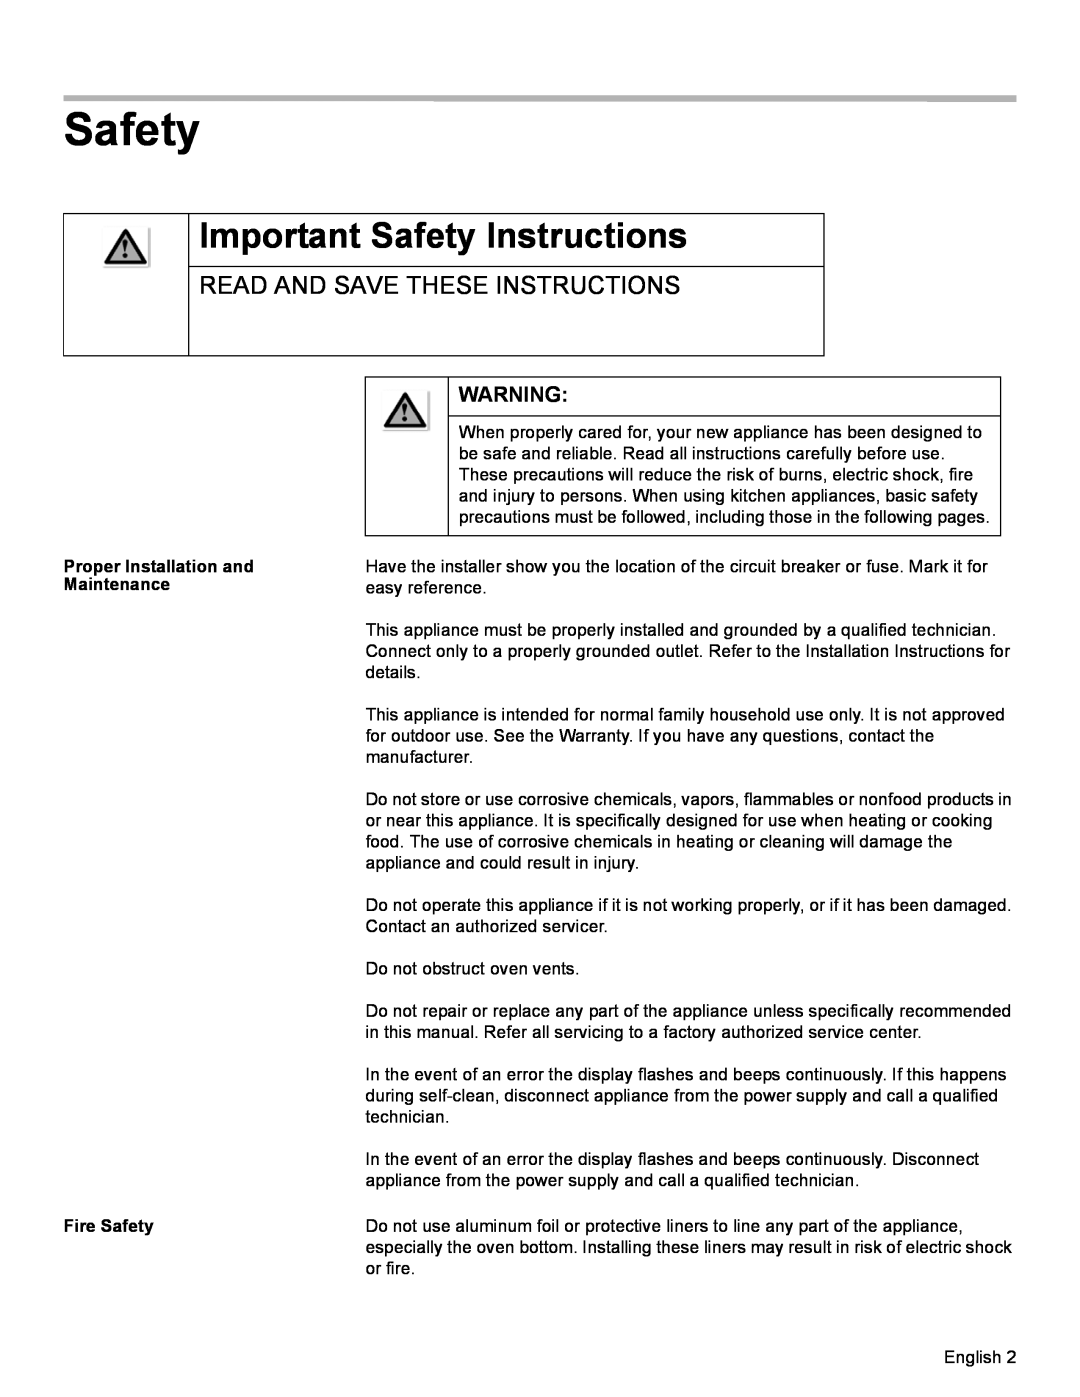 Bosch Appliances HBL57, HBL56, HBL54 Important Safety Instructions, Proper Installation and Maintenance Fire Safety 